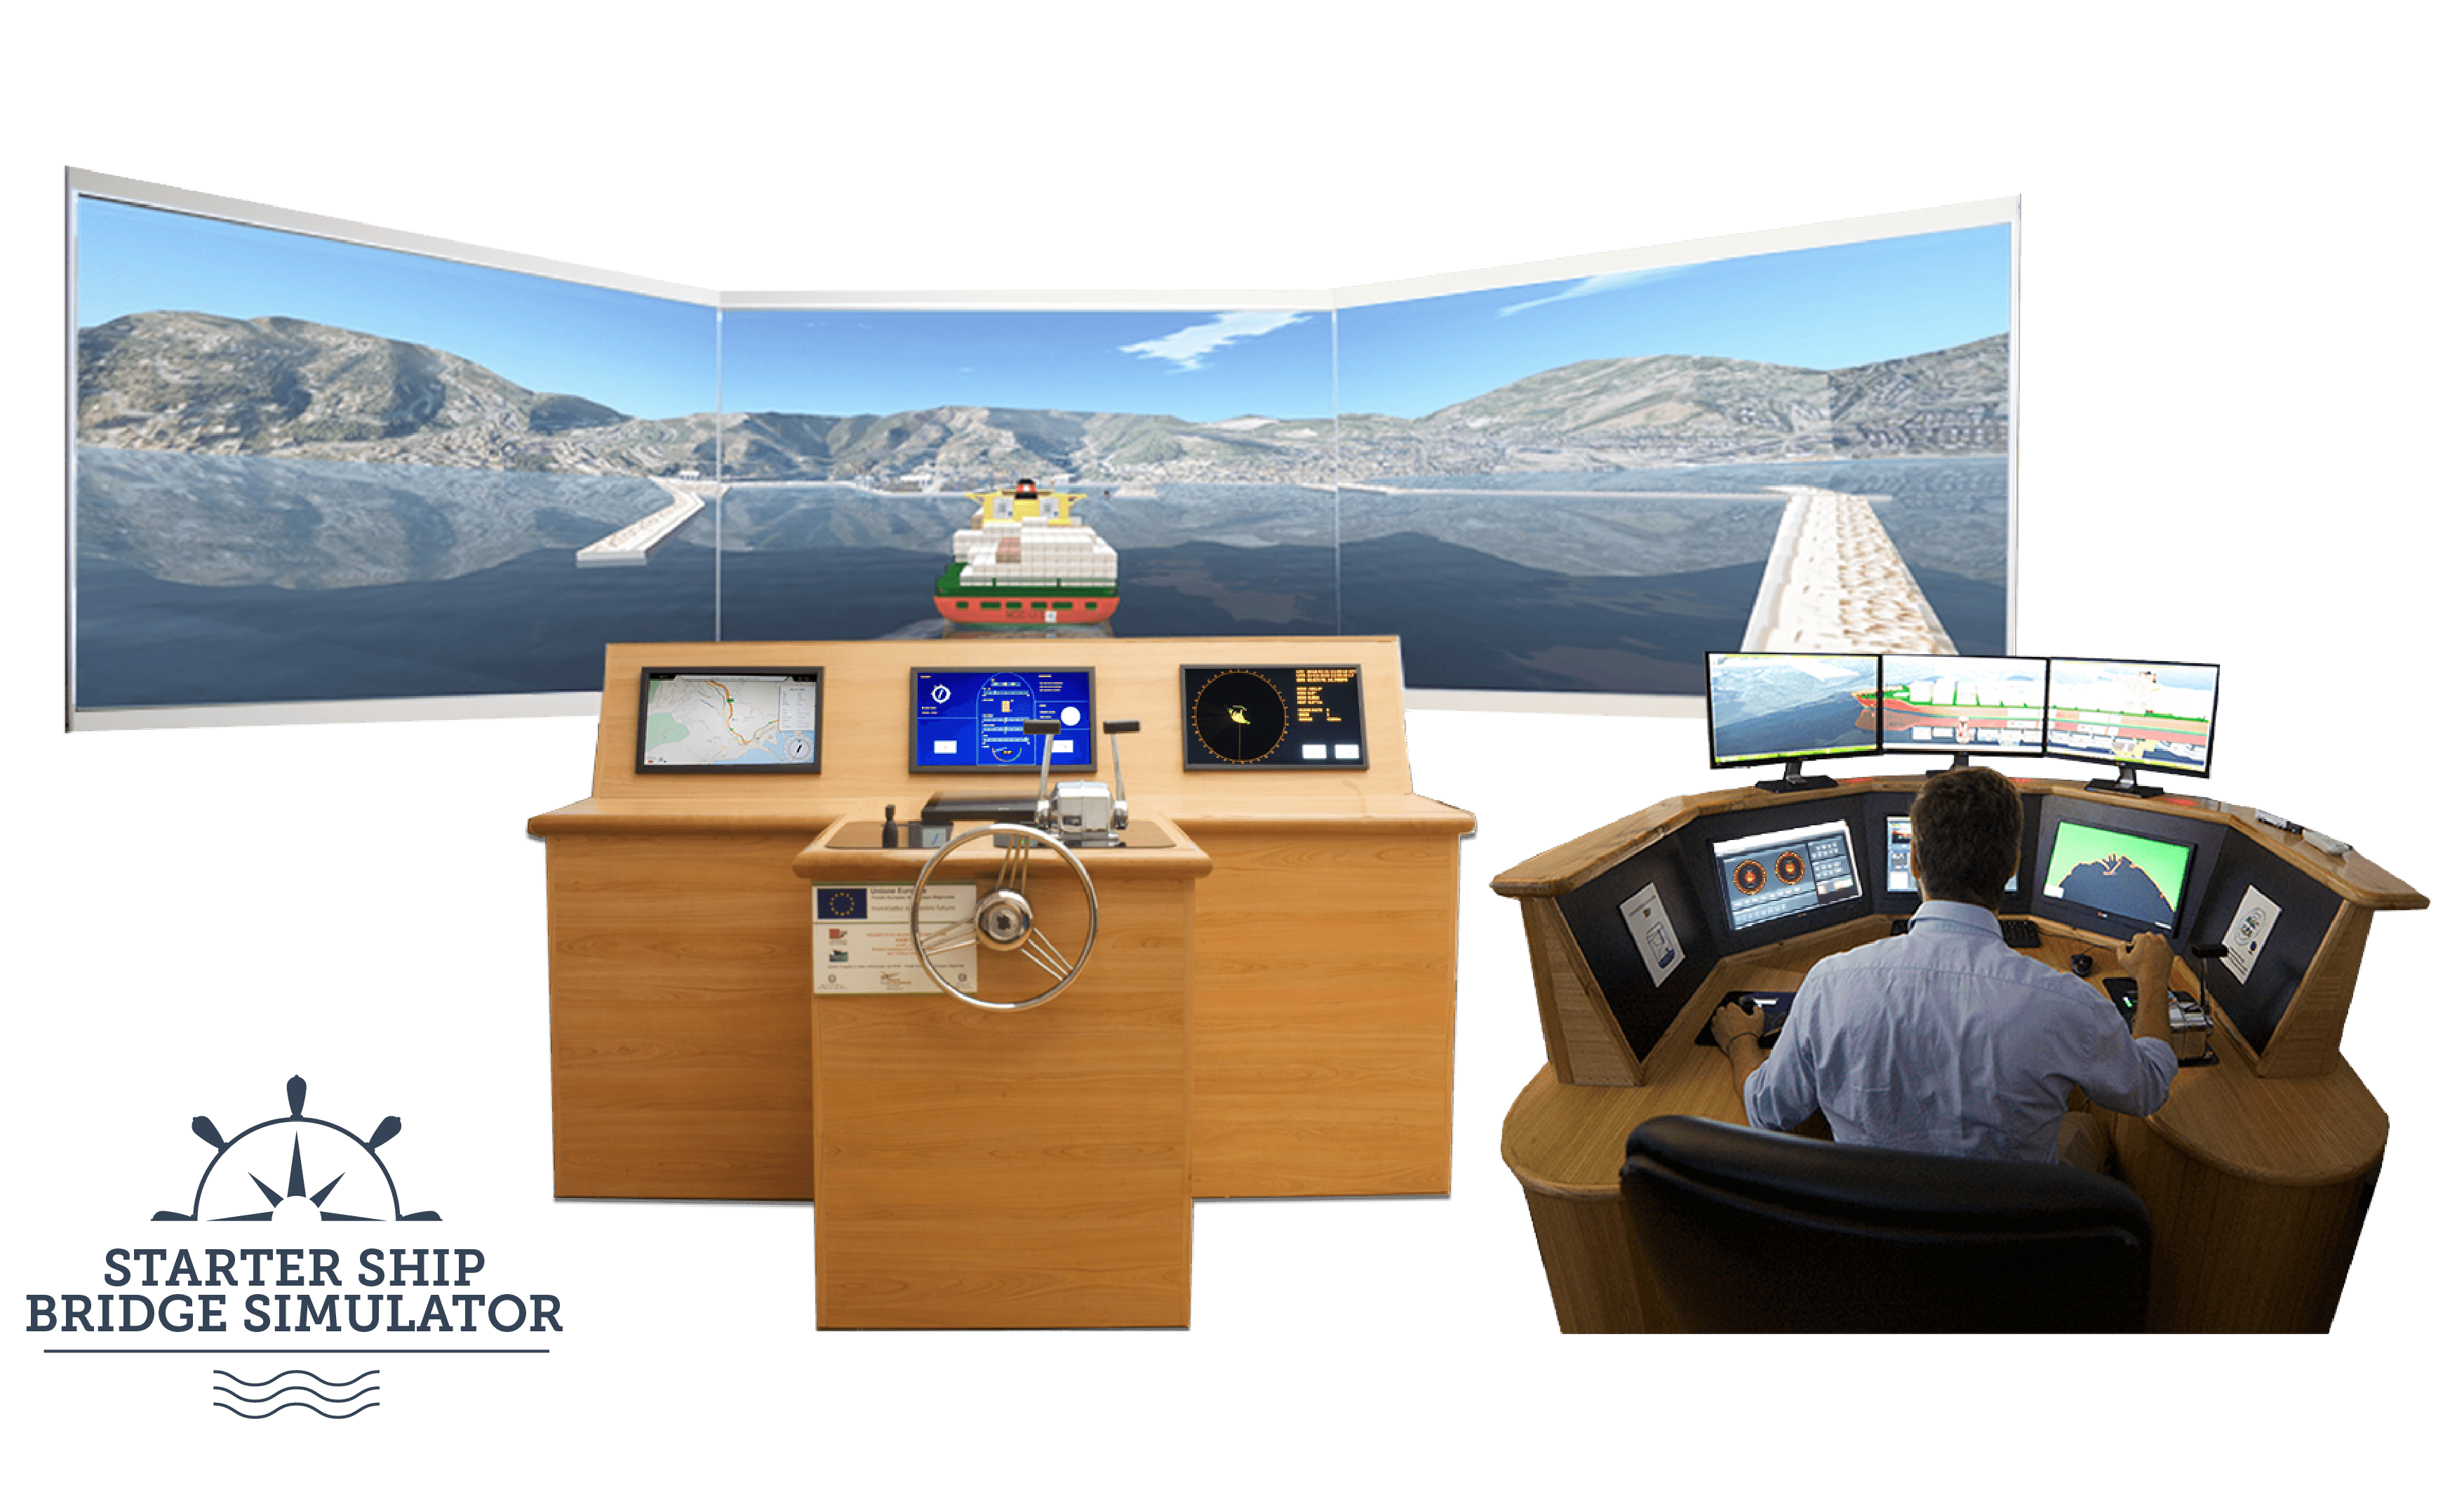 Product Ship Bridge Simulators - STCW, ECDIS, RADAR ARPA, GMDSS image